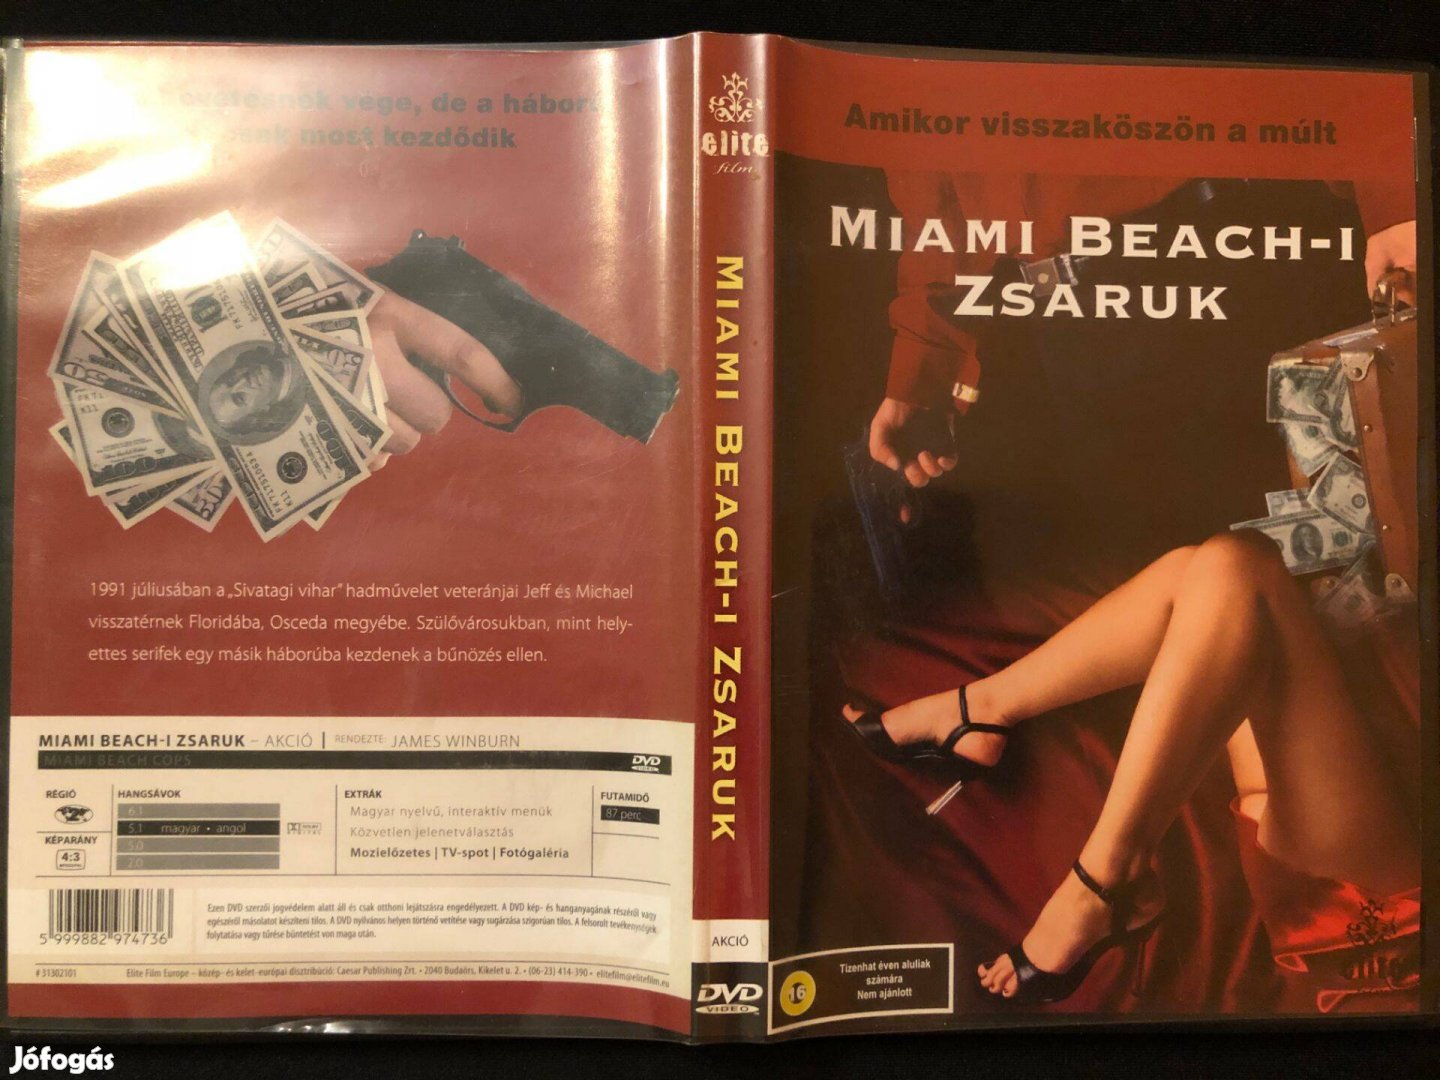 Miami Beach-i zsaruk (karcmentes, James Winburn) DVD